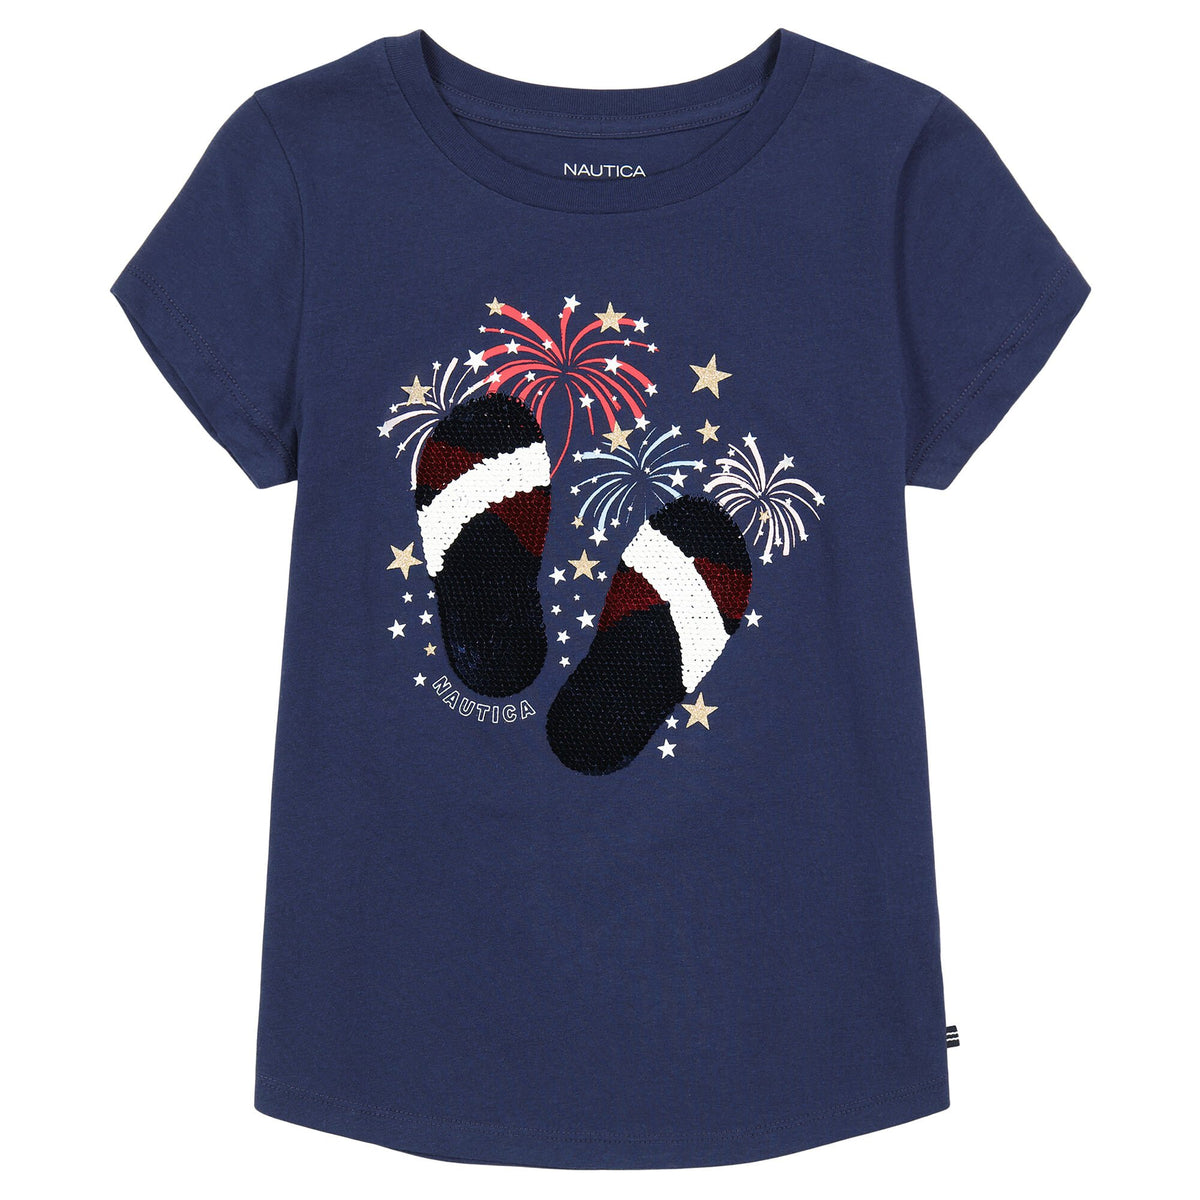 Nautica Toddler Girls' Flip Flops And Fireworks Sequin T-Shirt (2T-4T) Navy